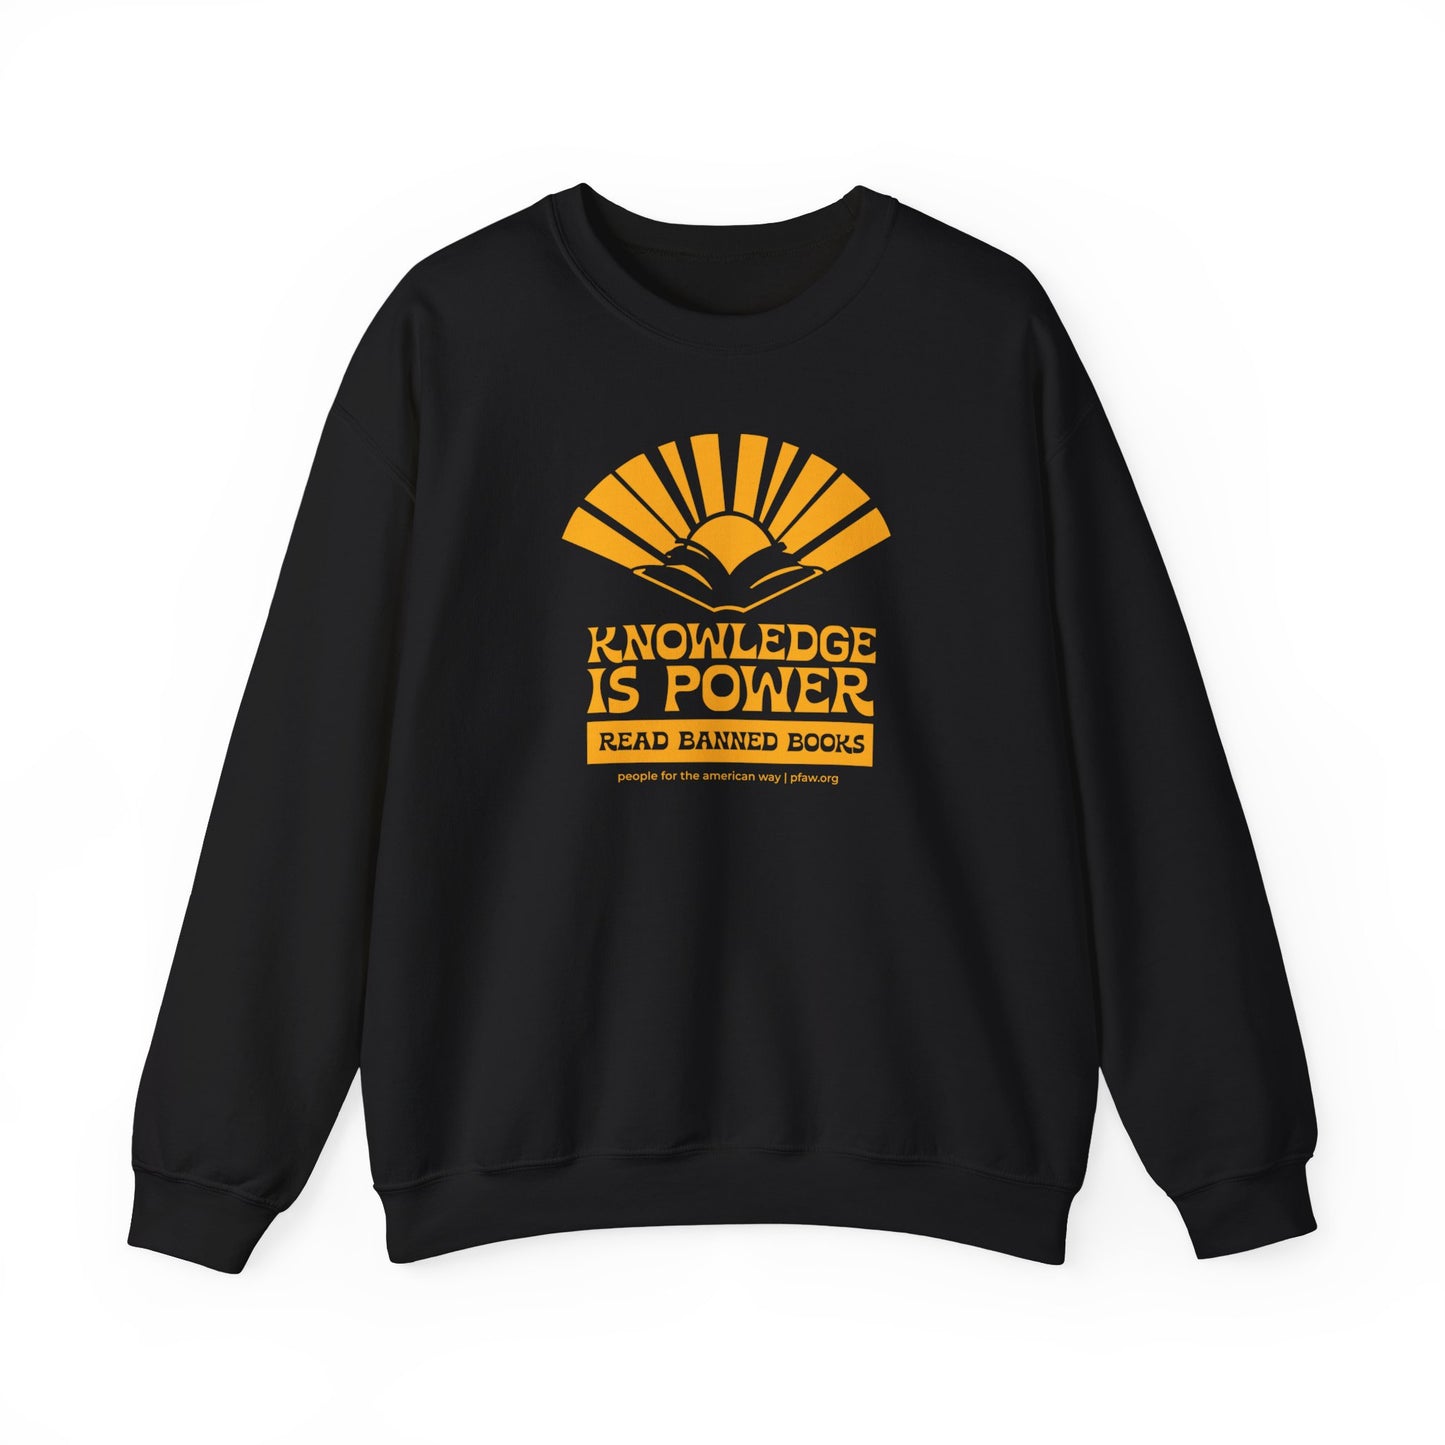 Knowledge is Power Crewneck Sweatshirt